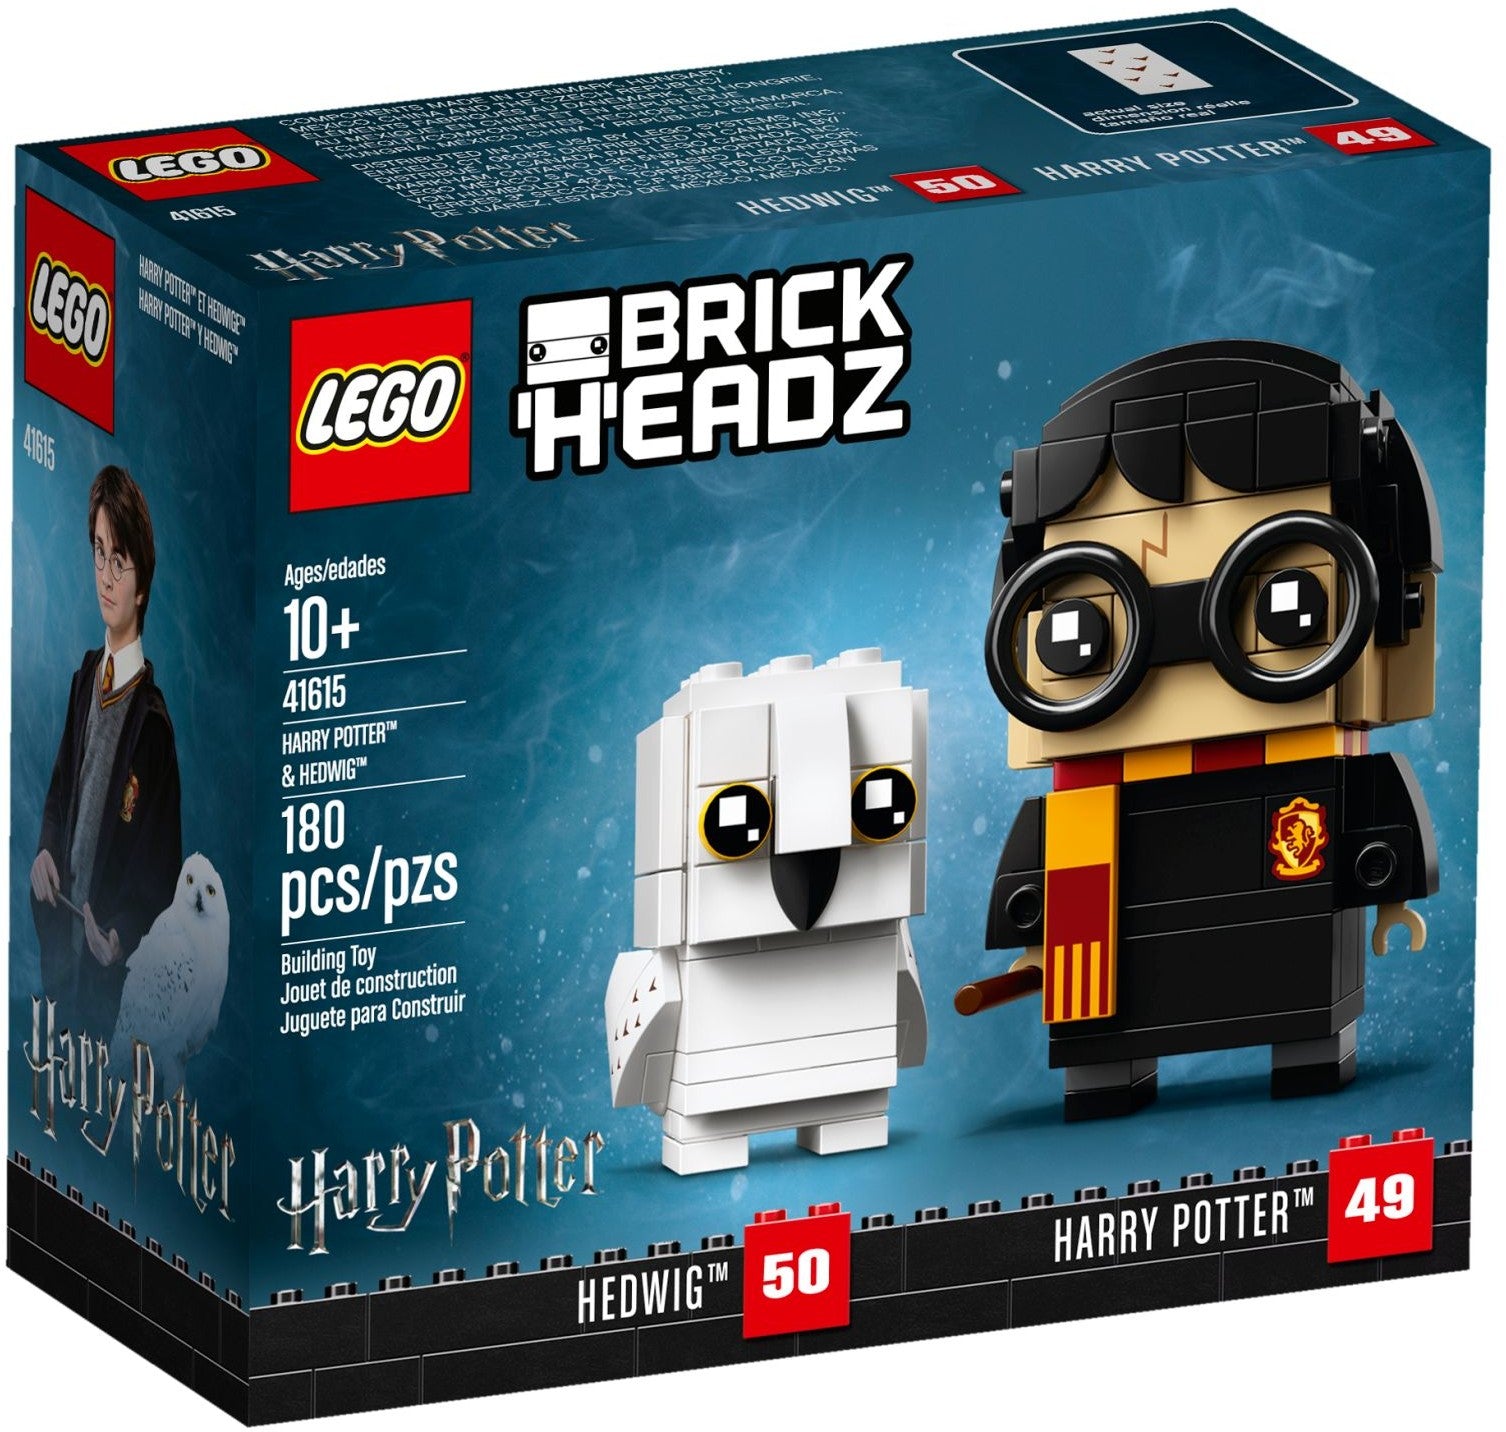 Lego Brickheadz 41615 - Harry Potter & Hedwig